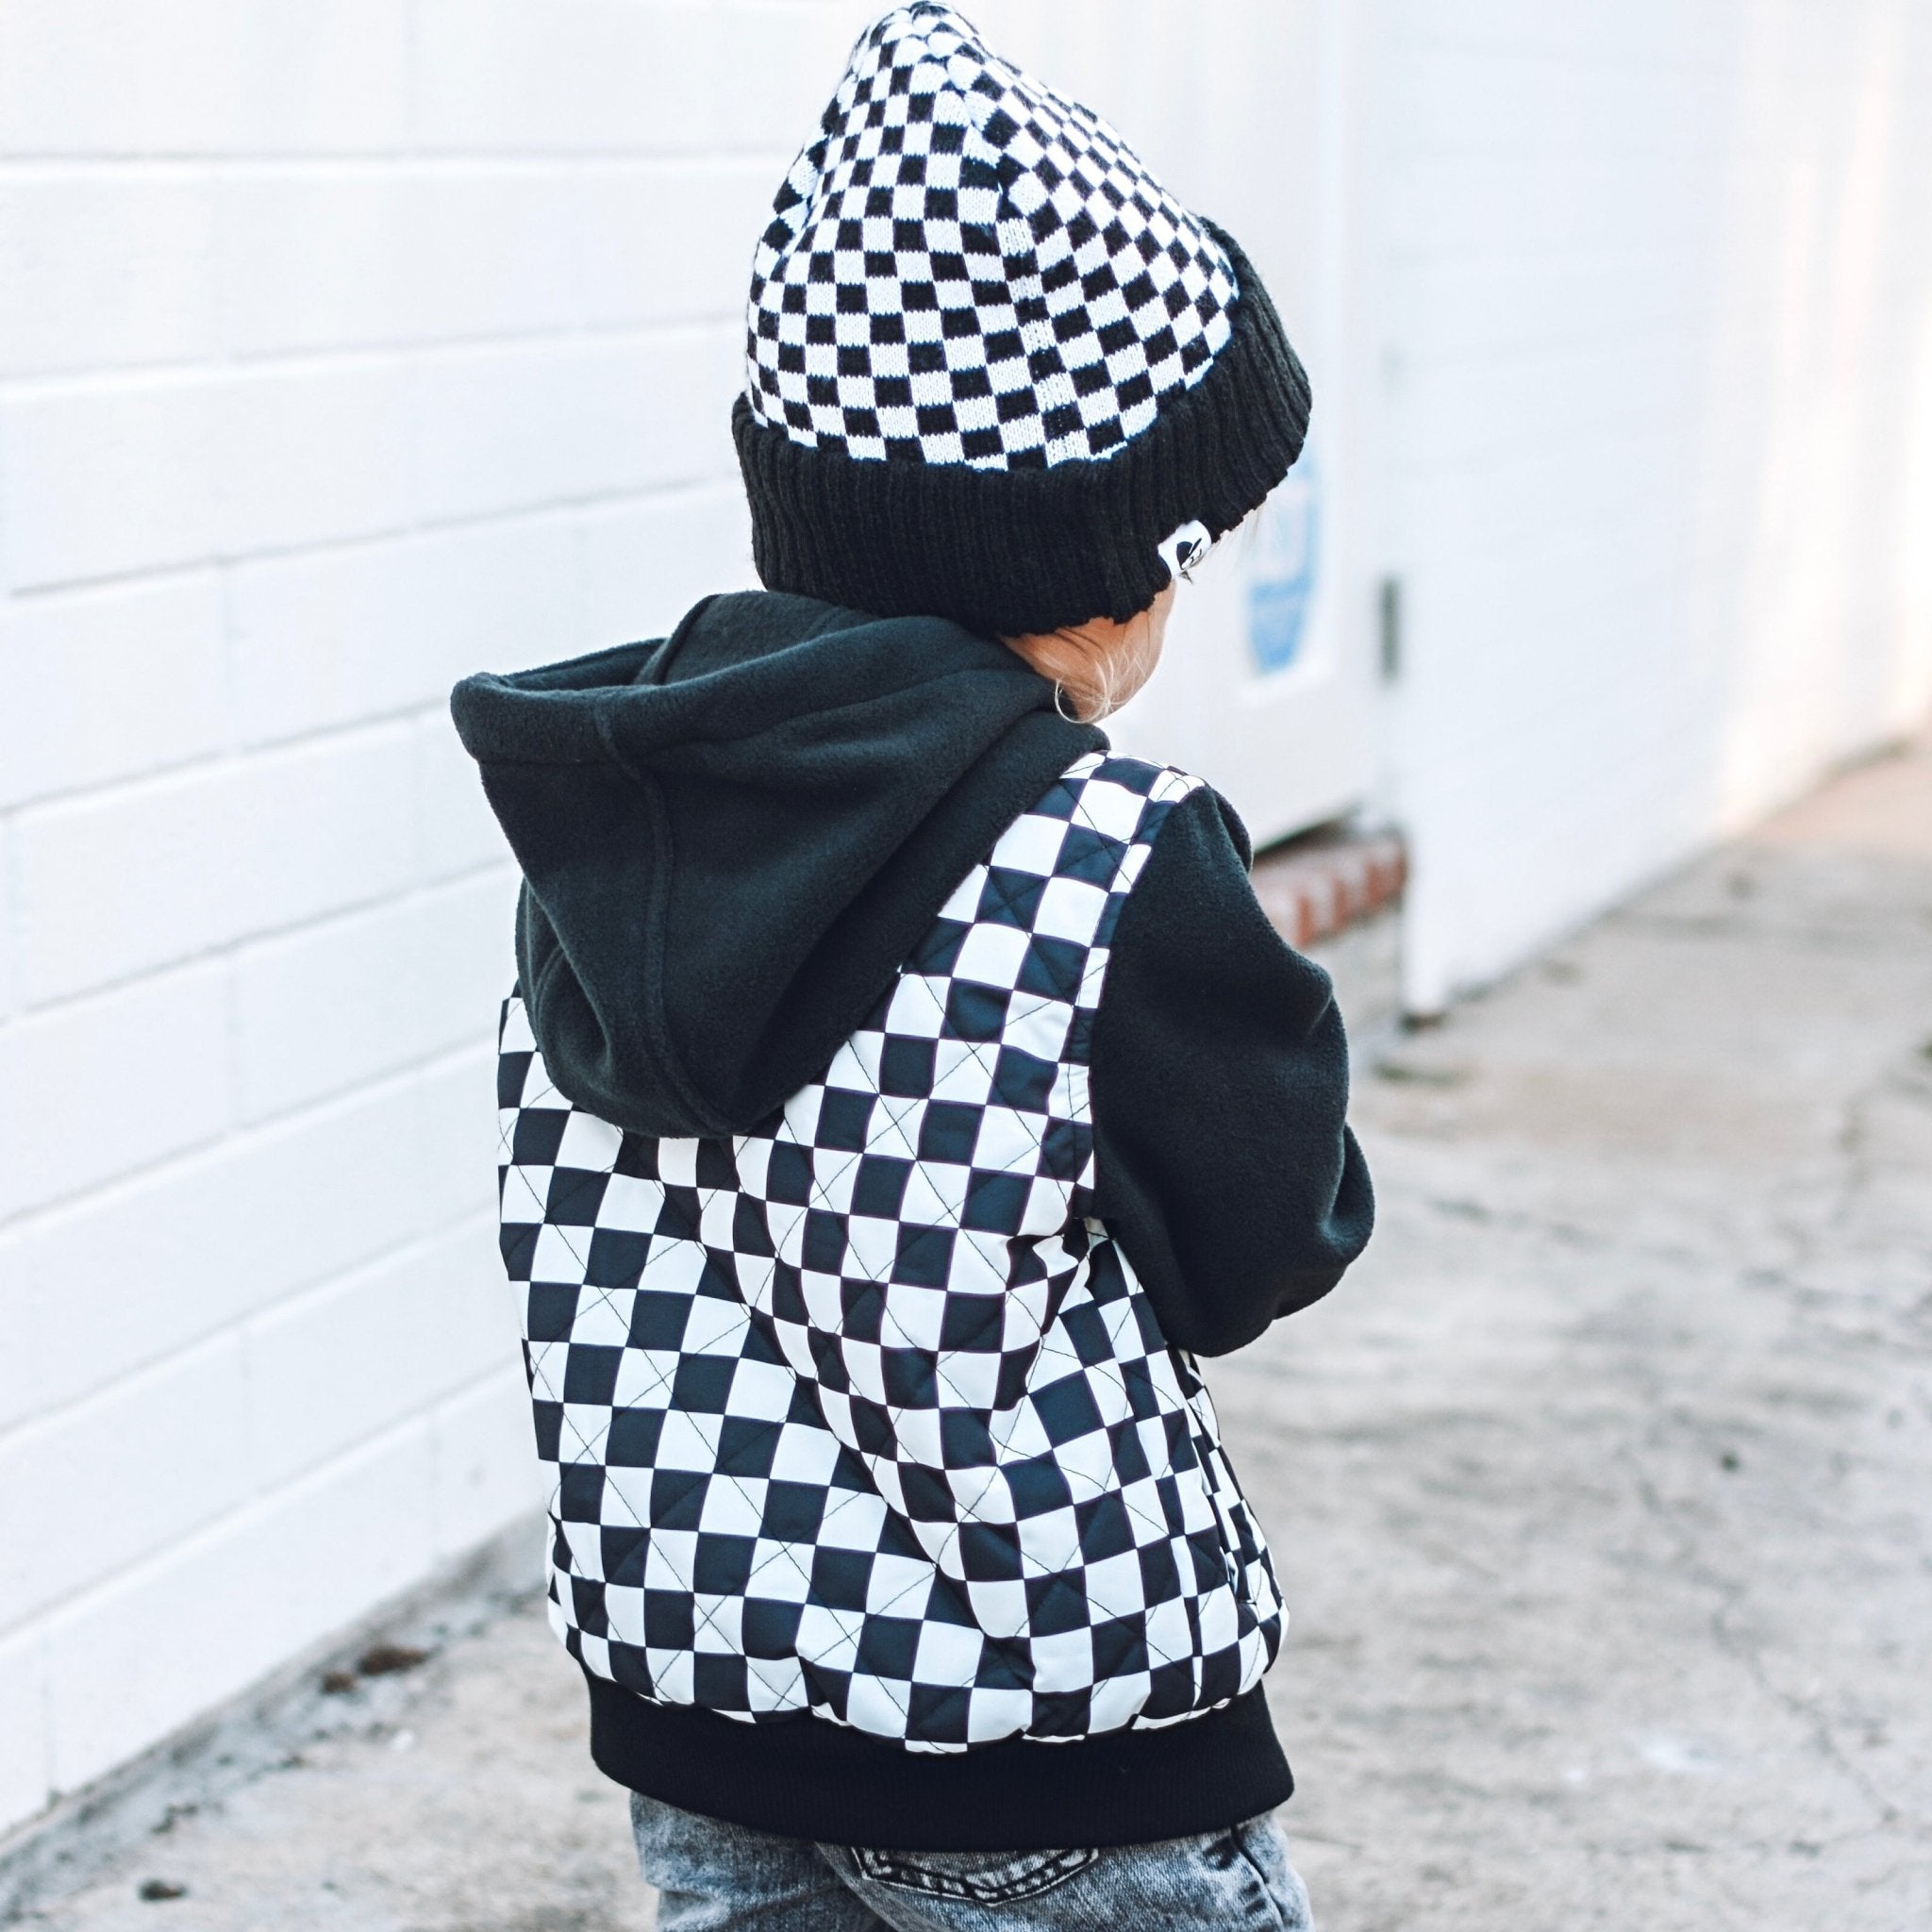 Checkered Fleece Hoodie Jacket - George Hats